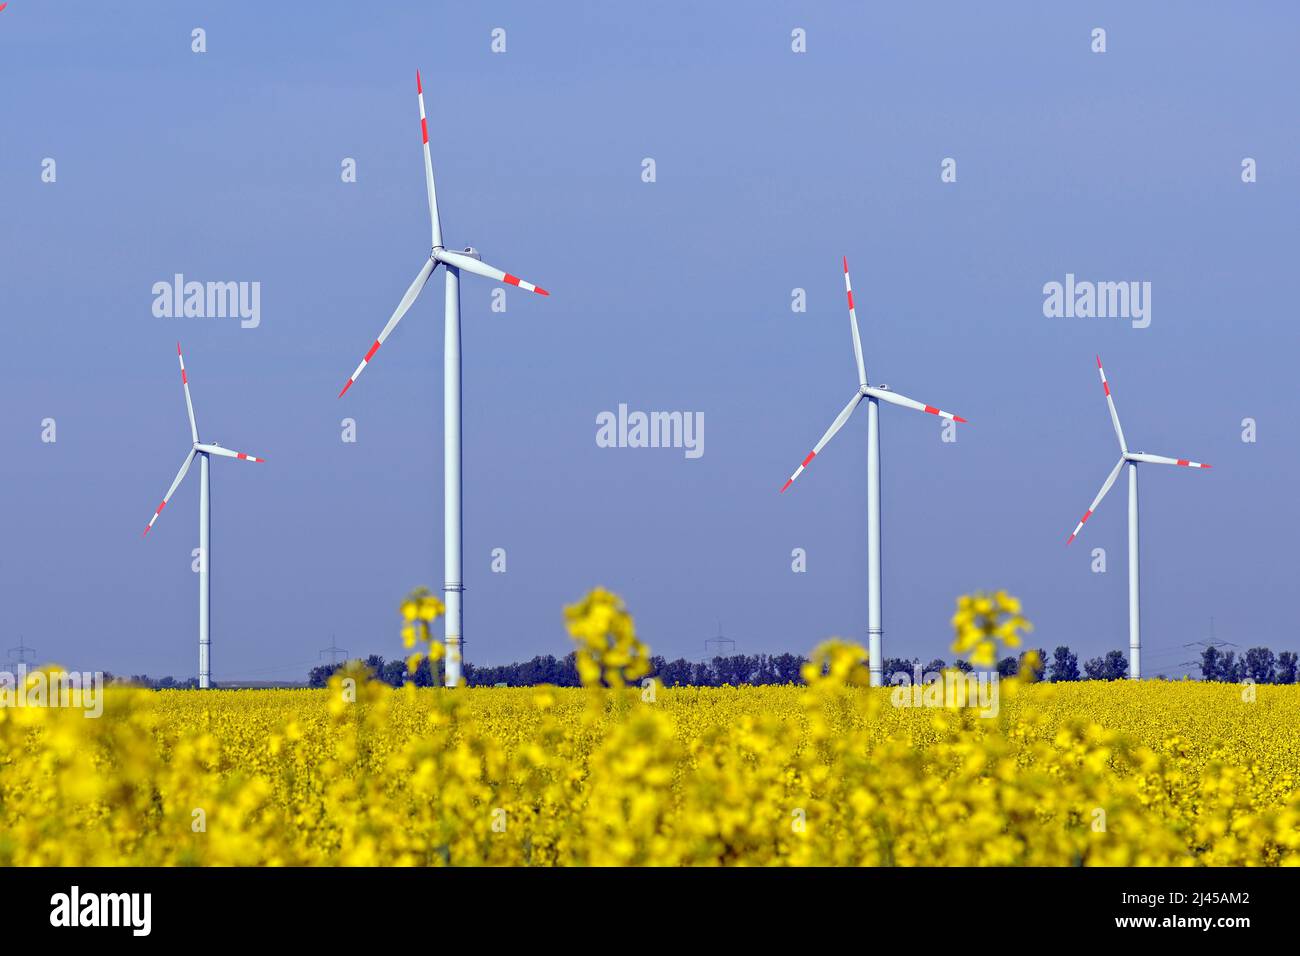 Windkraftanlagen in Rapsfeld (Brassica napus) erneuerbare Energie, Erneuerbare Energien, Steigende Energiepreise, Rapsfeld, Stock Photo